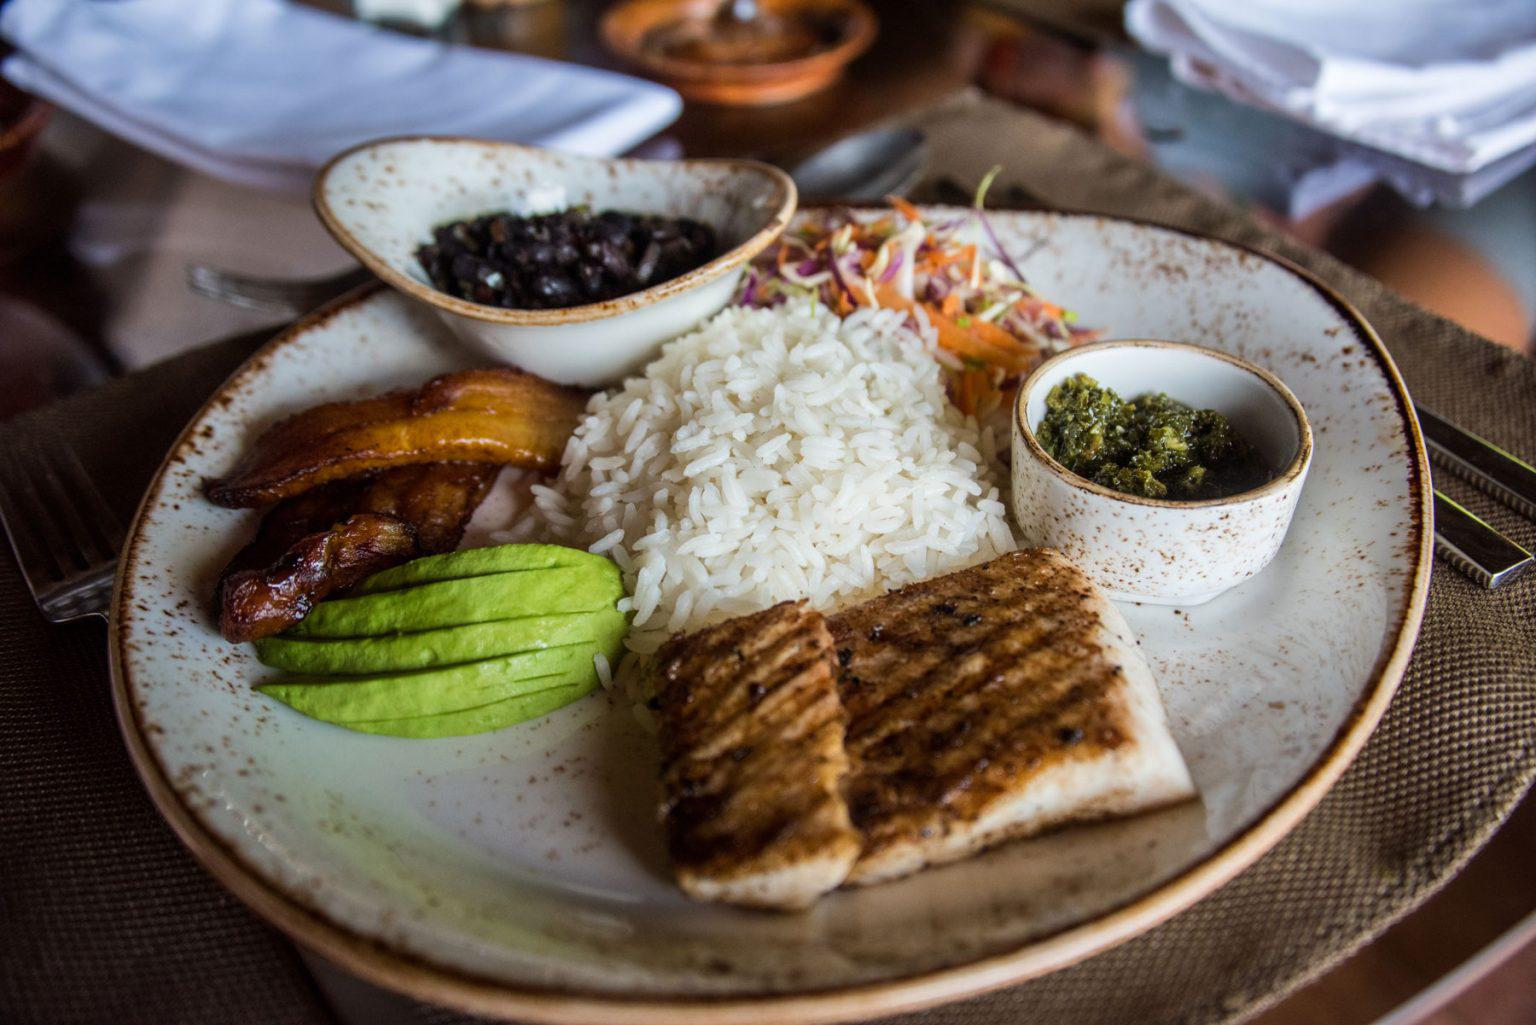 A full plate of casado, a popular Caribbean dish.